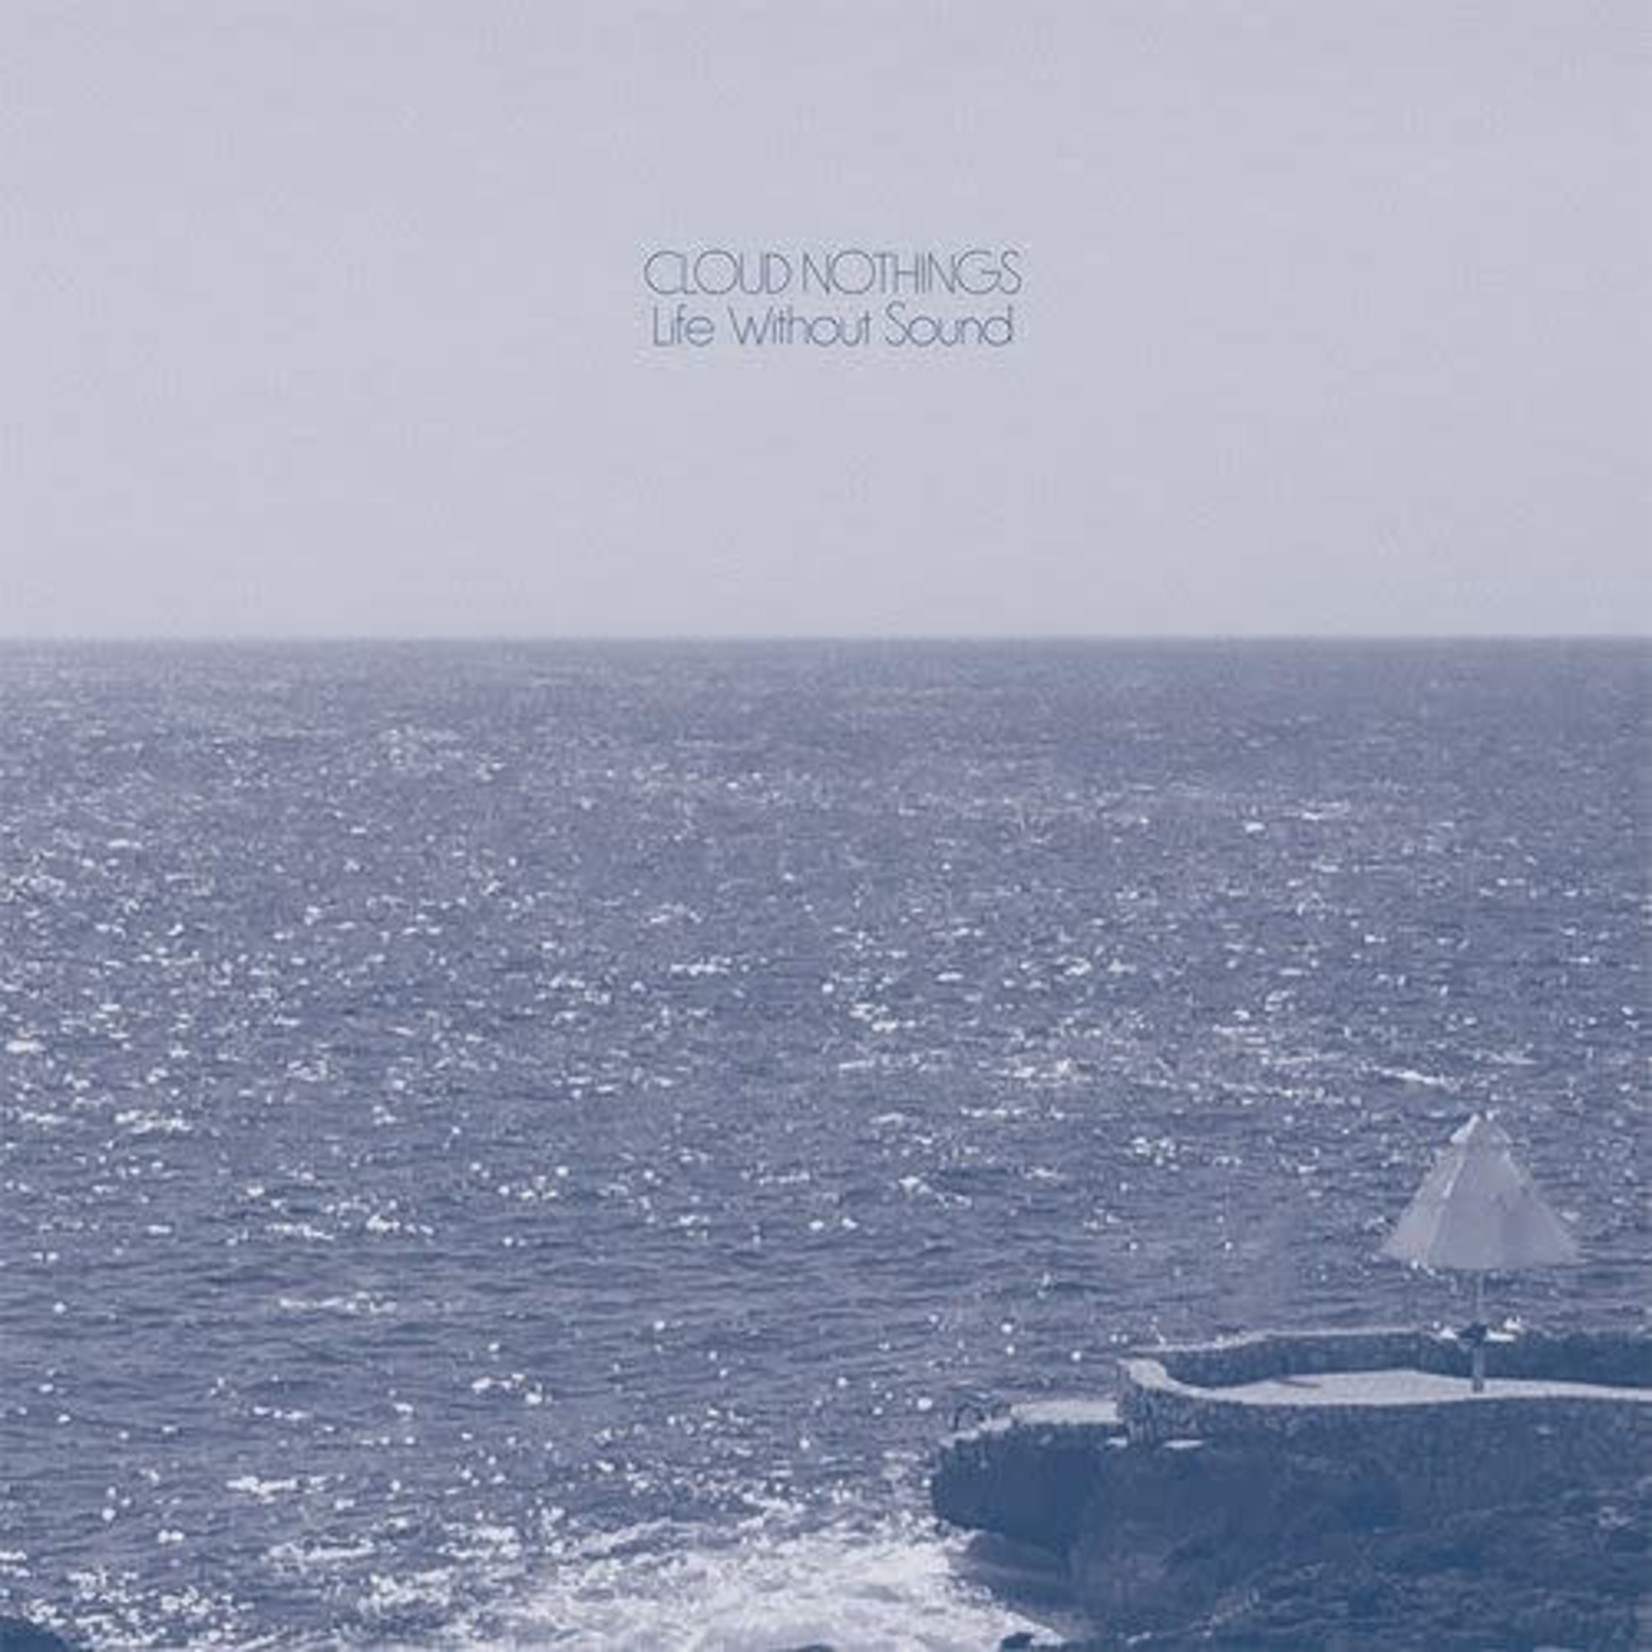 Carpark Cloud Nothings - Life Without Sound (LP)